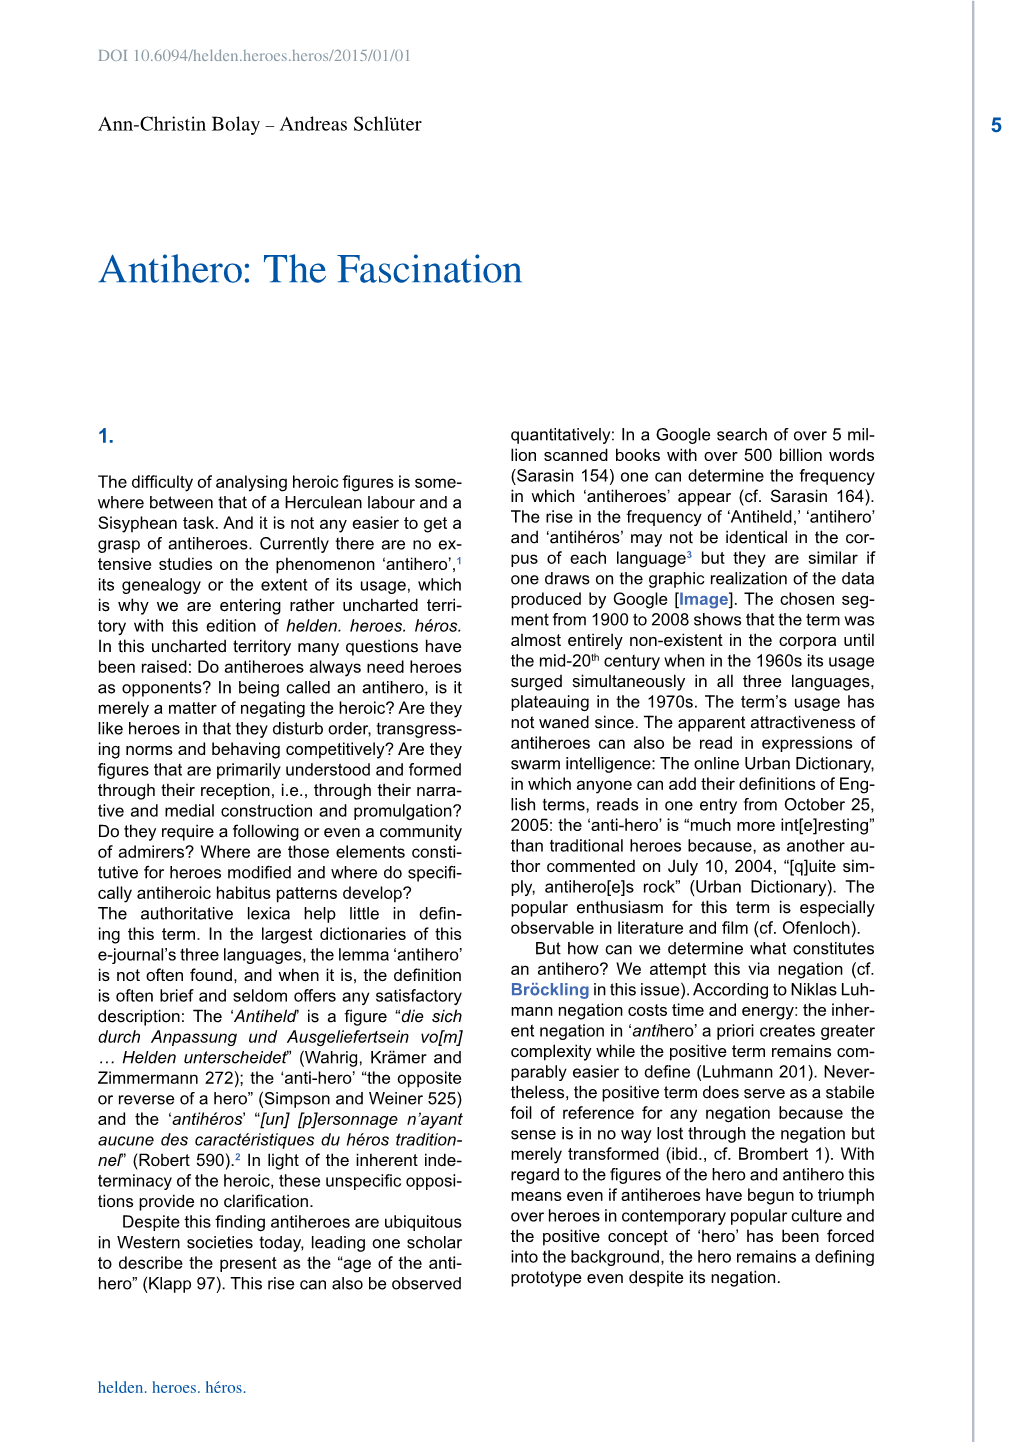 Antihero: the Fascination